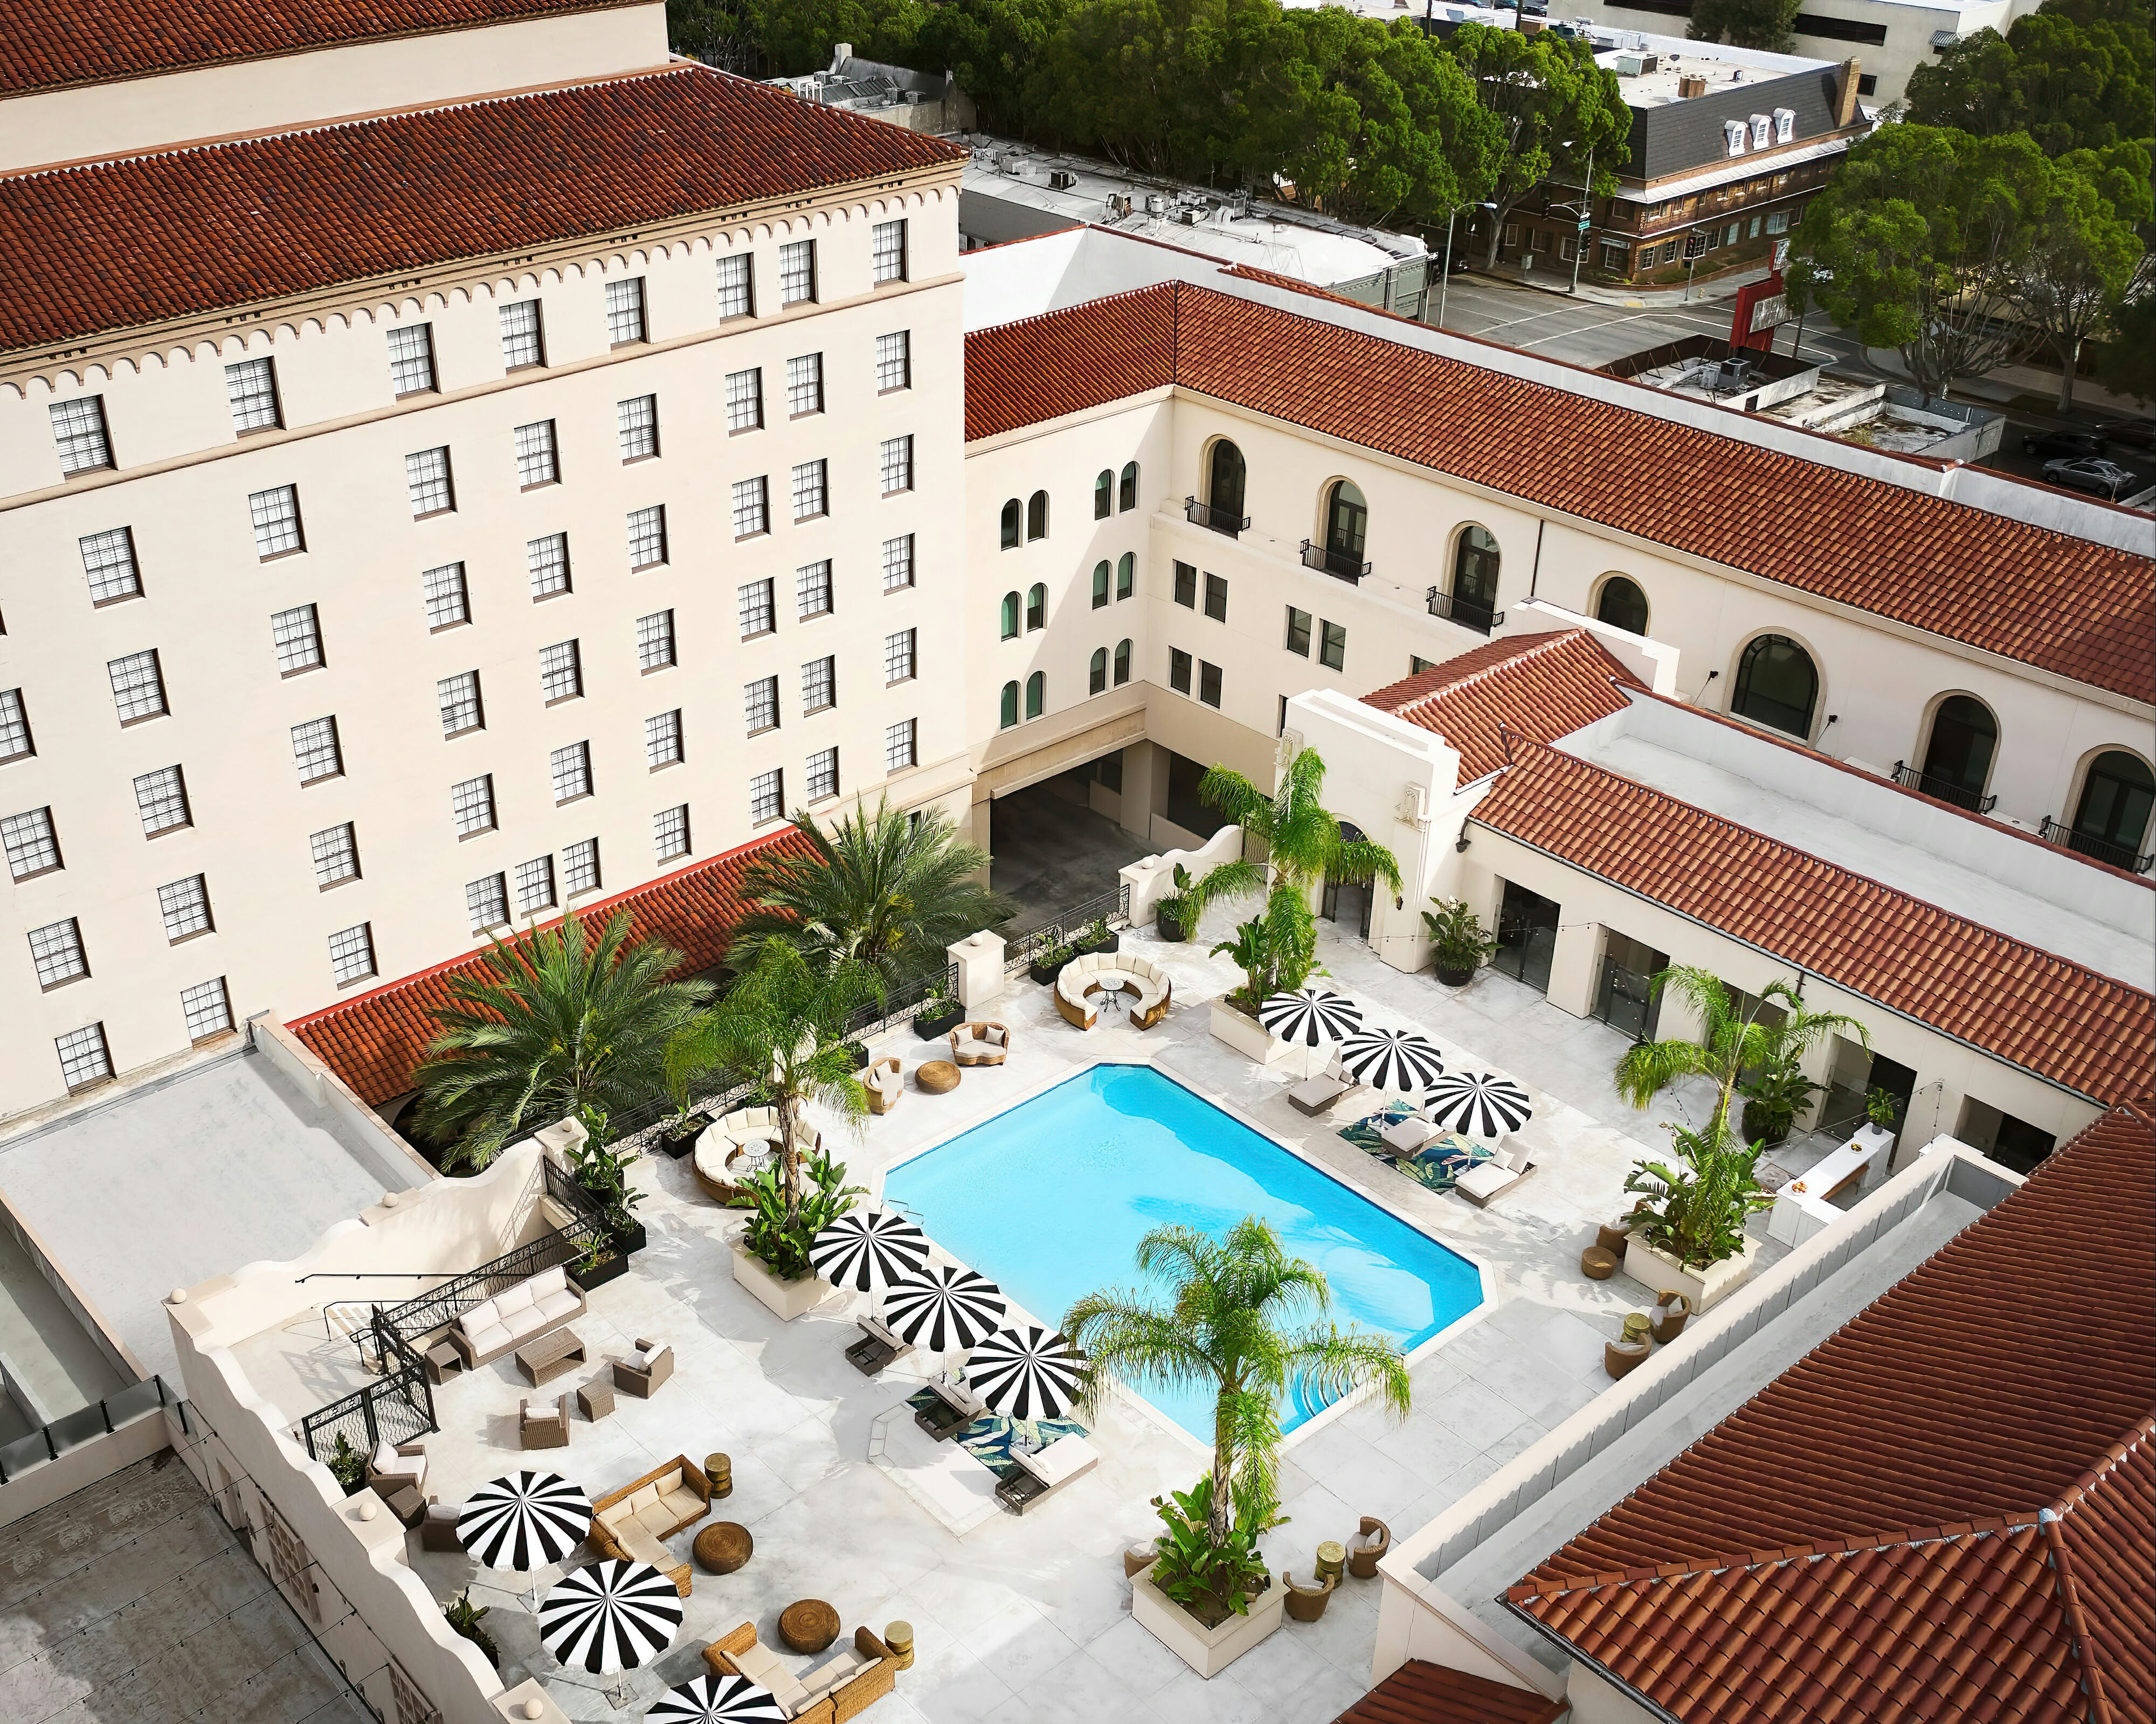 Building view of Pasadena Hotel & Pool